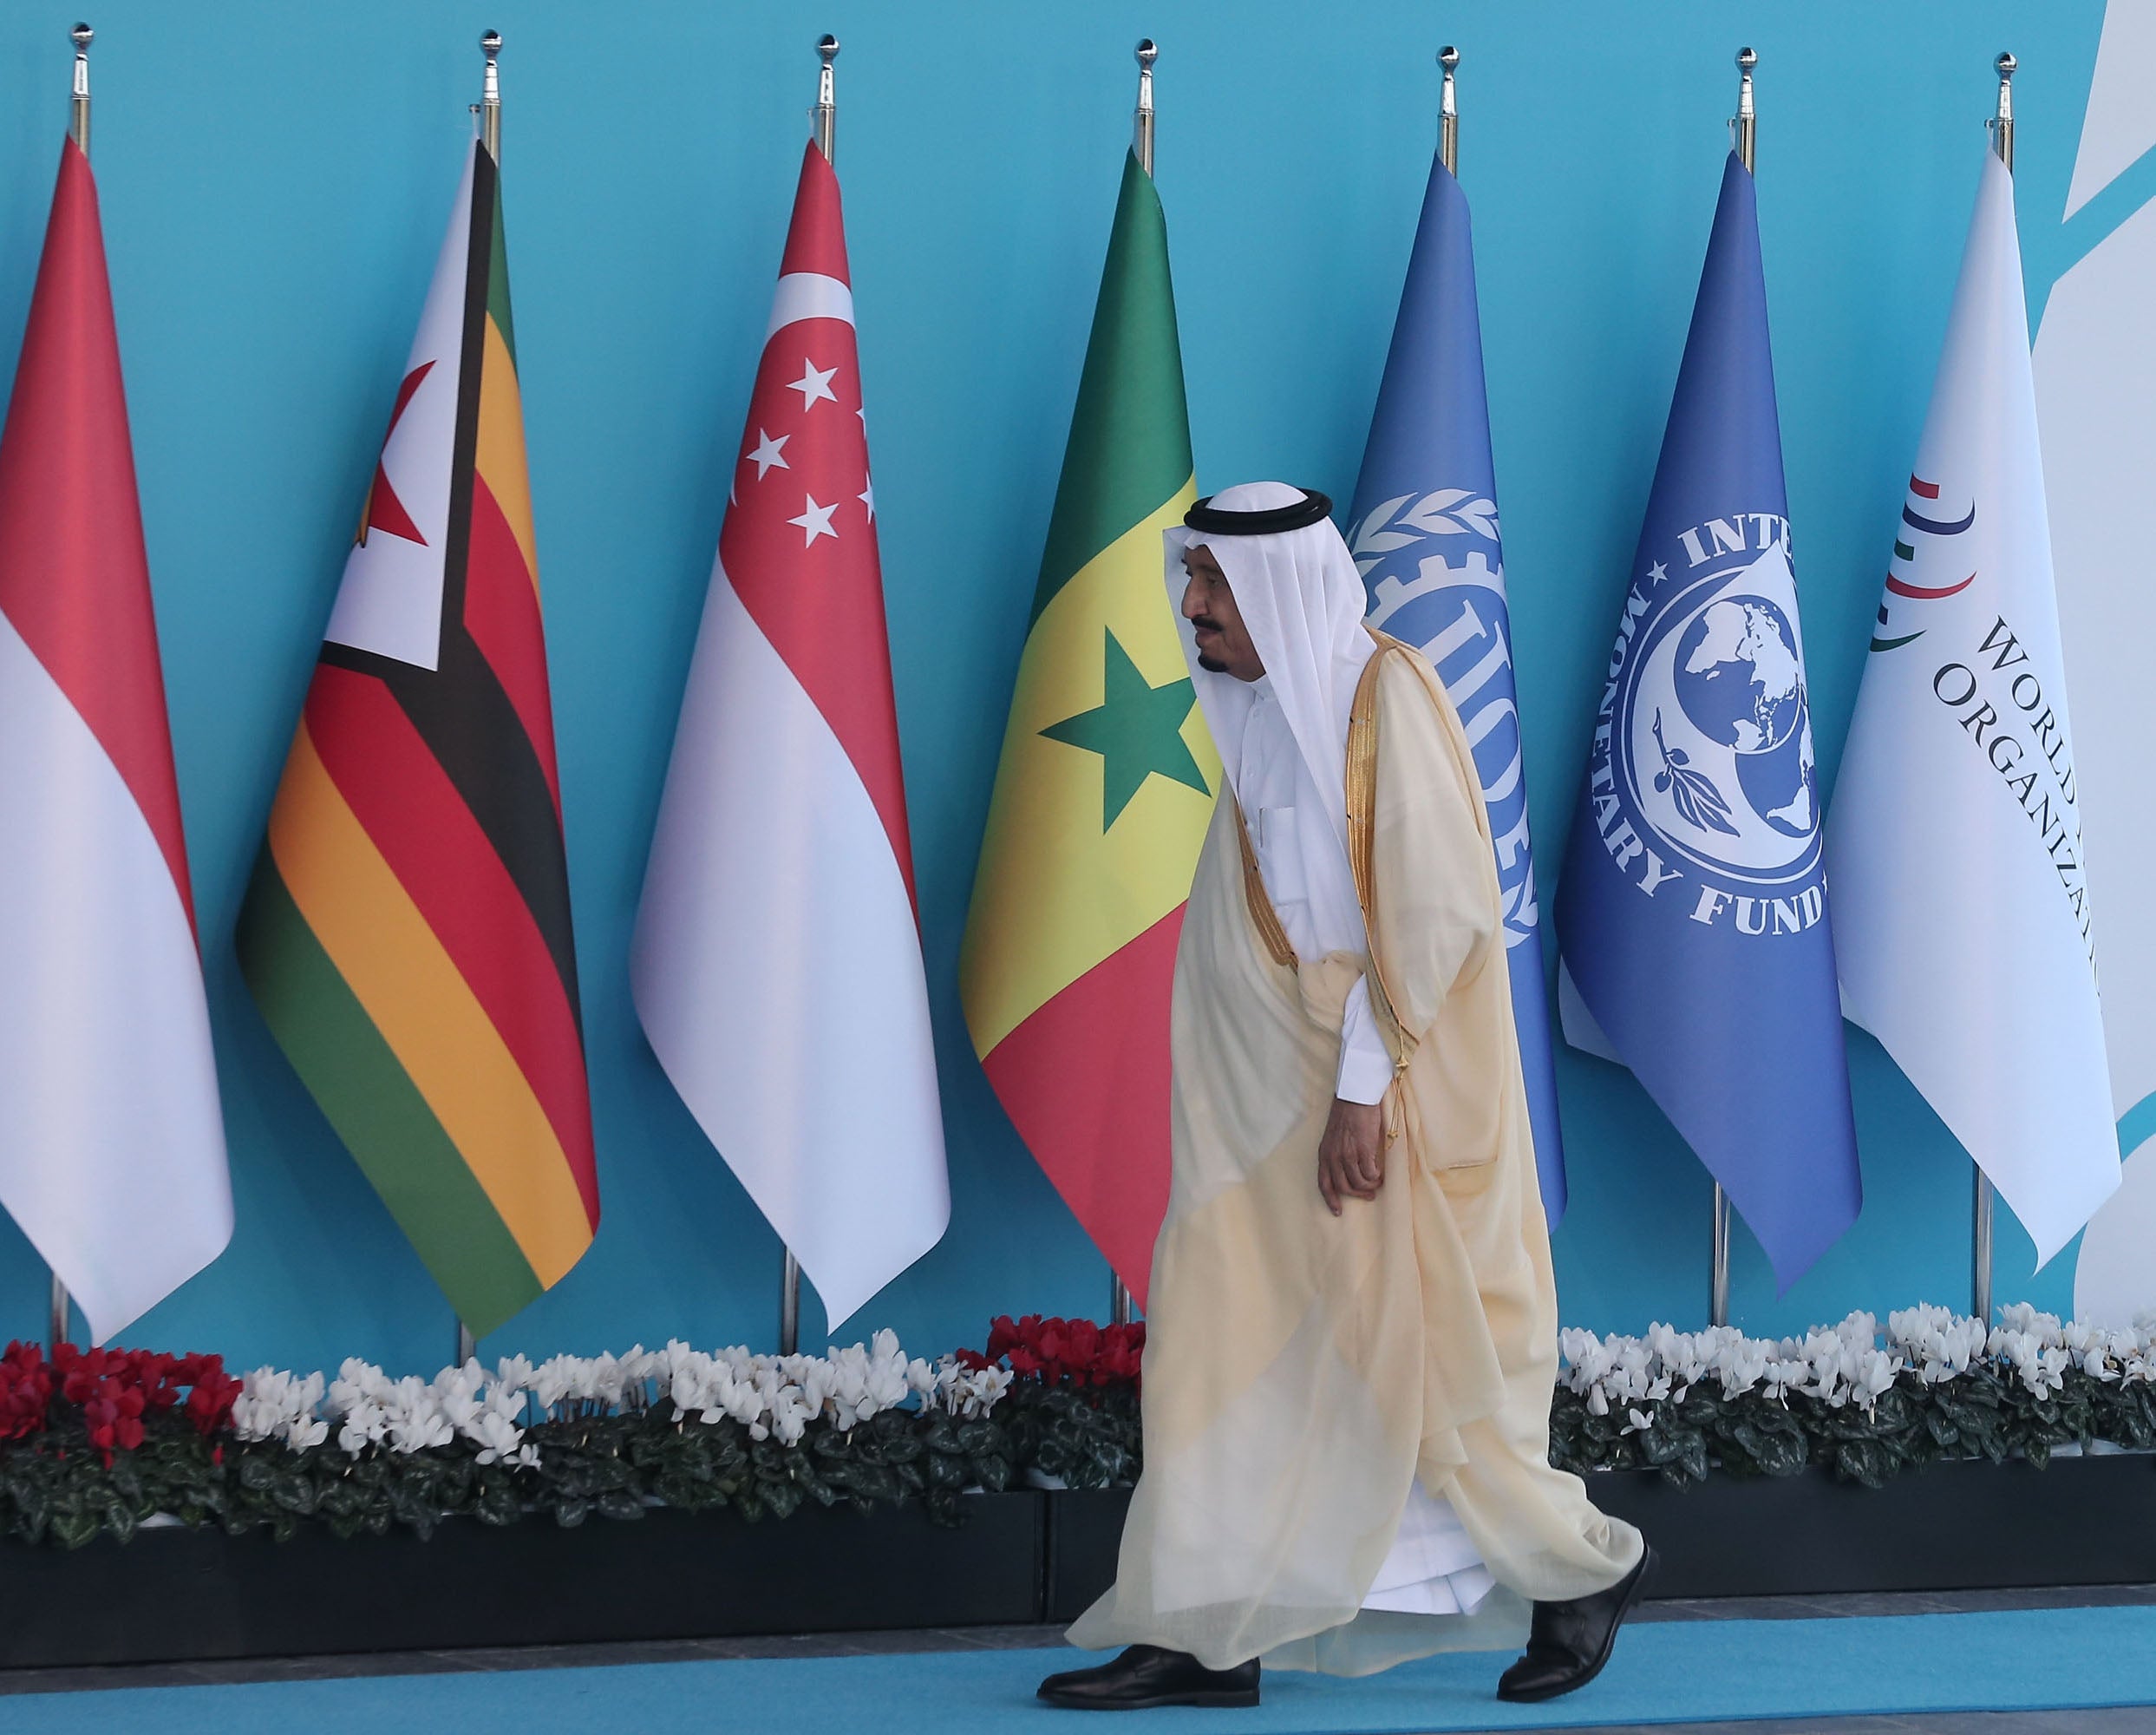 King Salman at the G20 summit in Turkey in November 2015